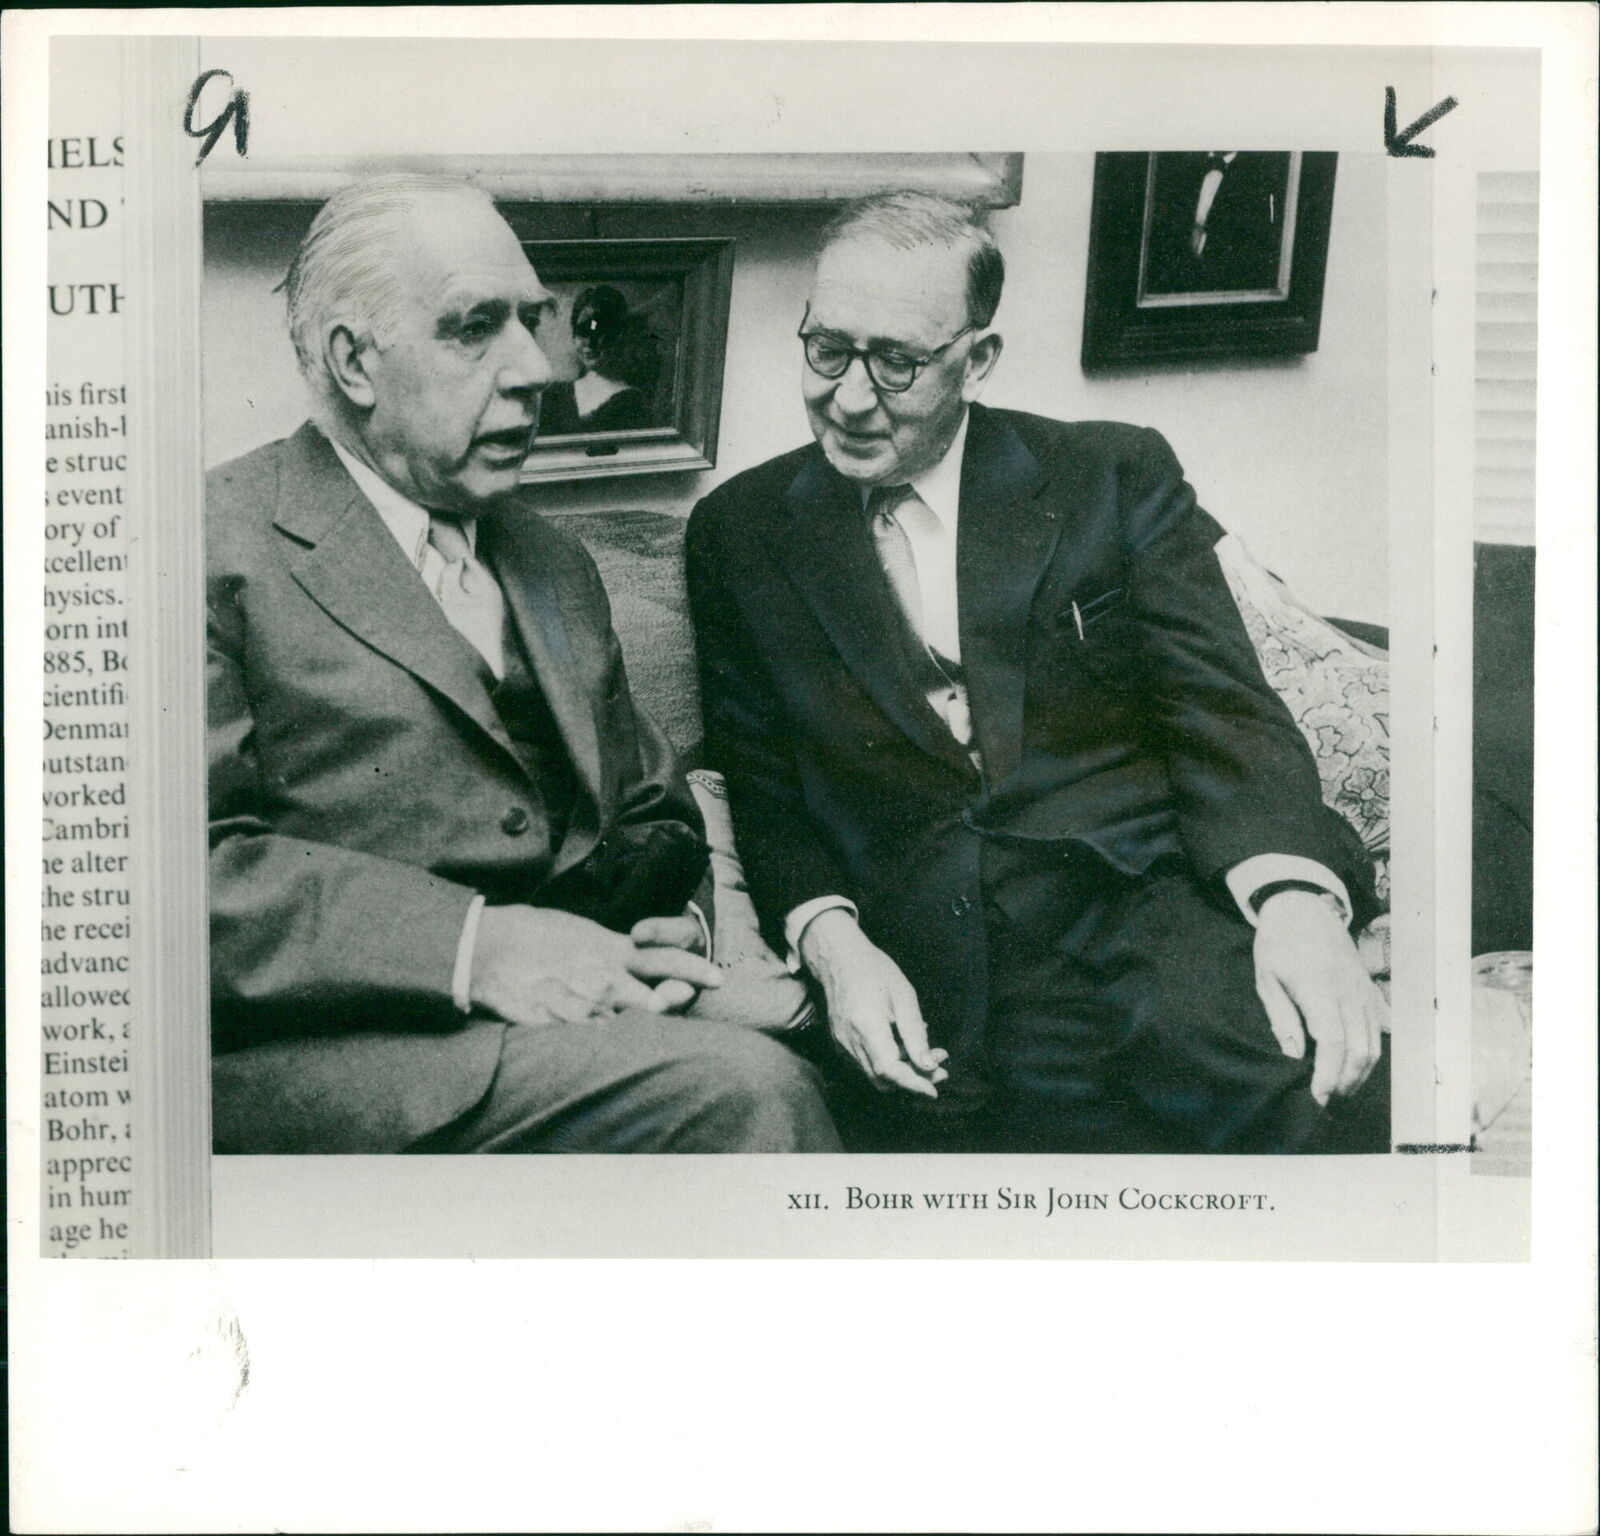 iels Bohr with john cockroft - Vintage Photograph 1251515